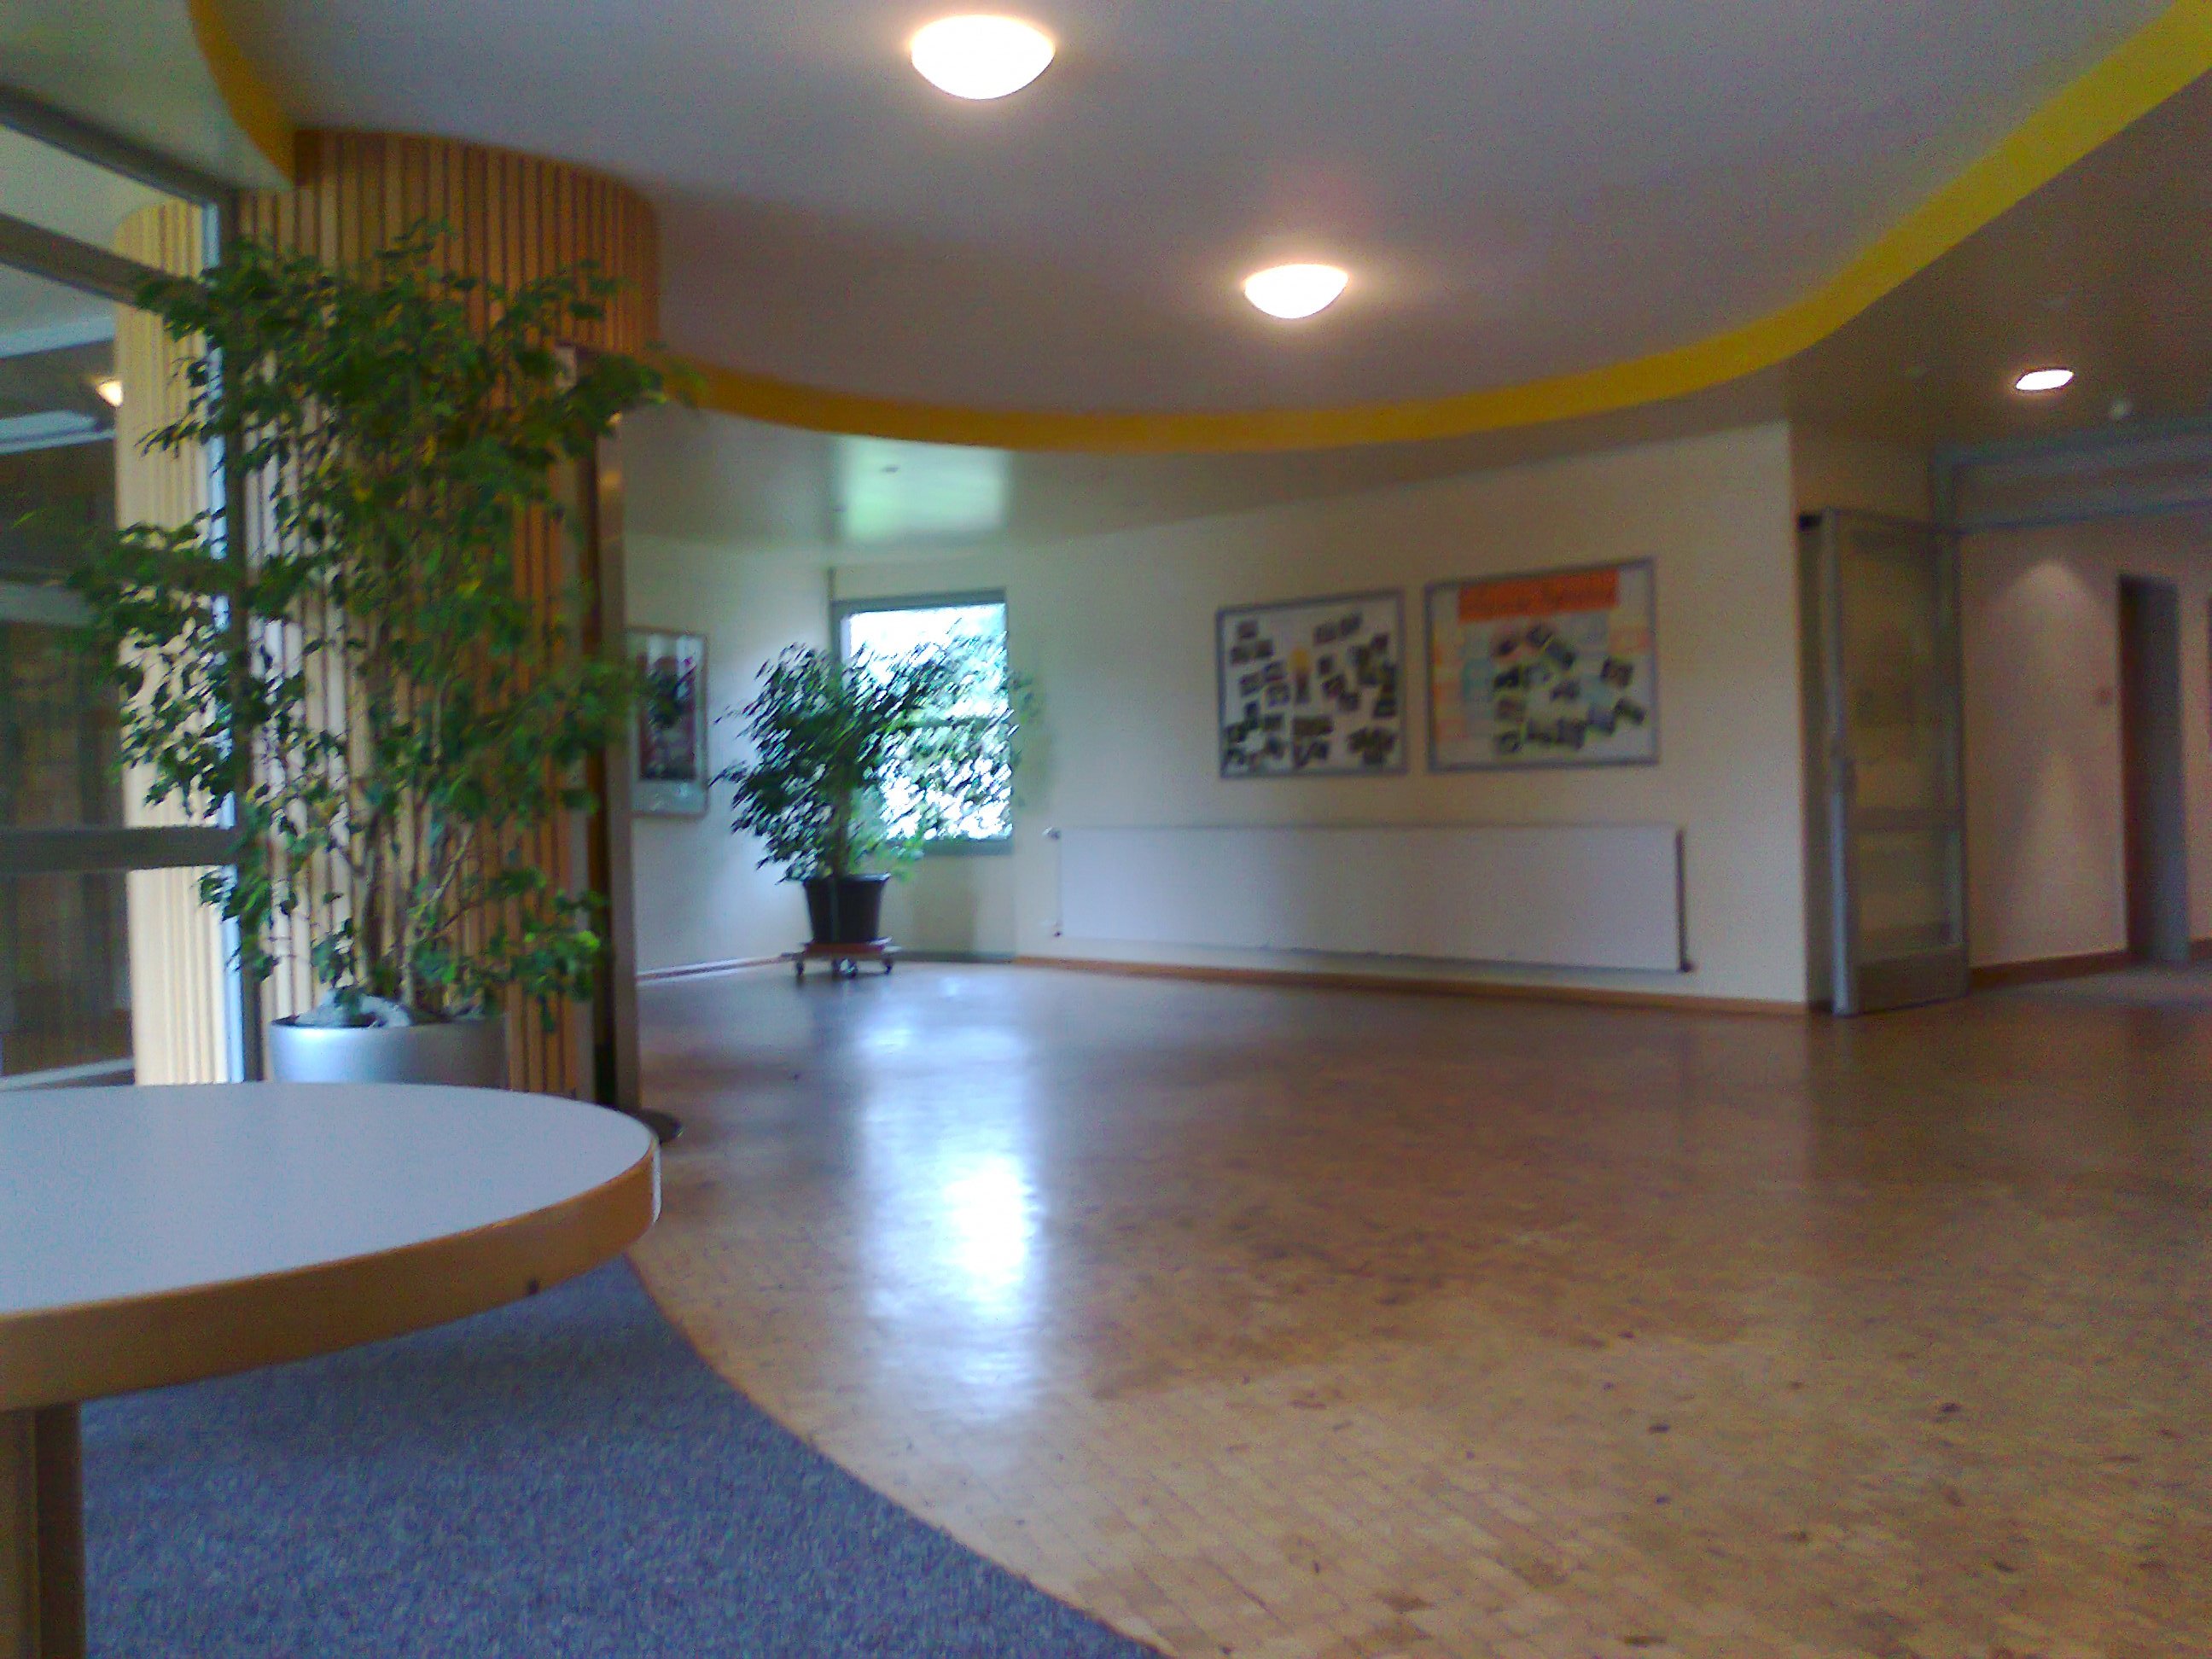 Kinder Jugend Psychiatrie Wilhelmstift Foyer Eingang